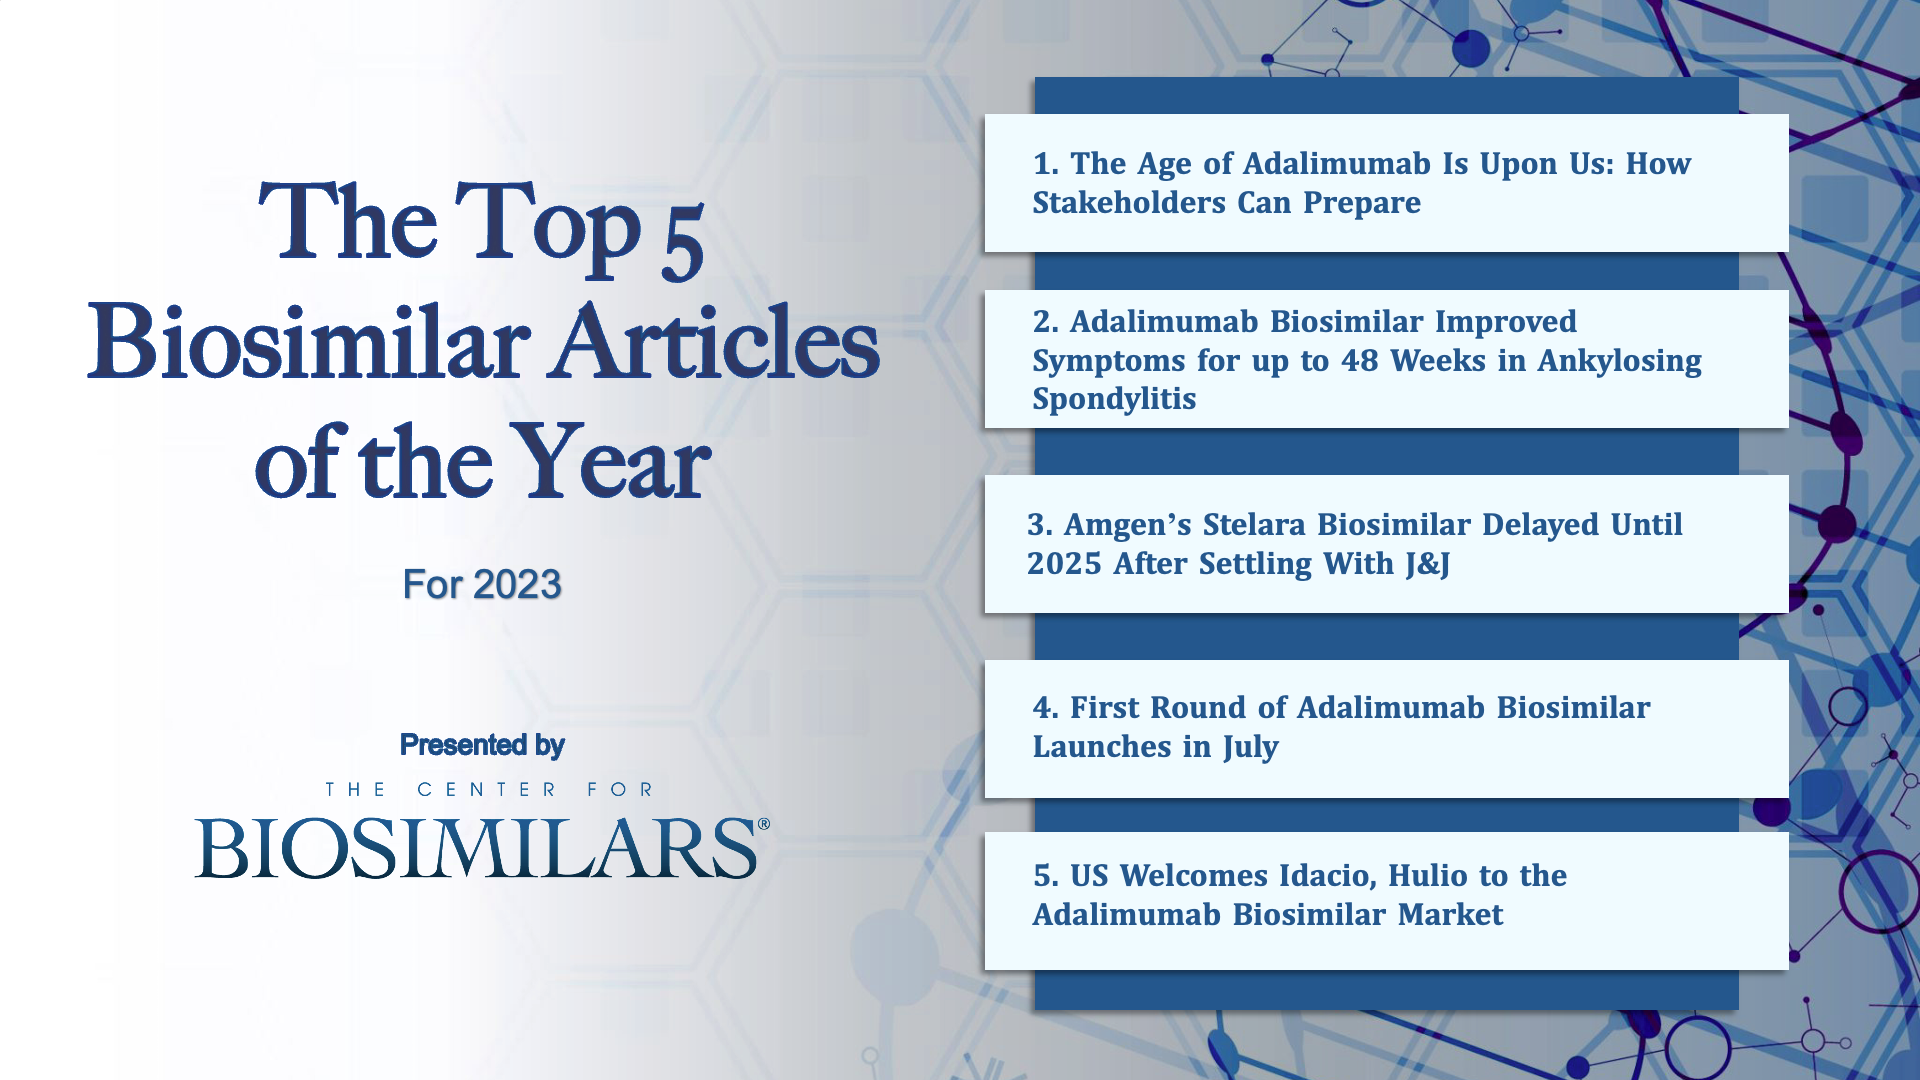 The Top 5 Biosimilar Articles of 2023